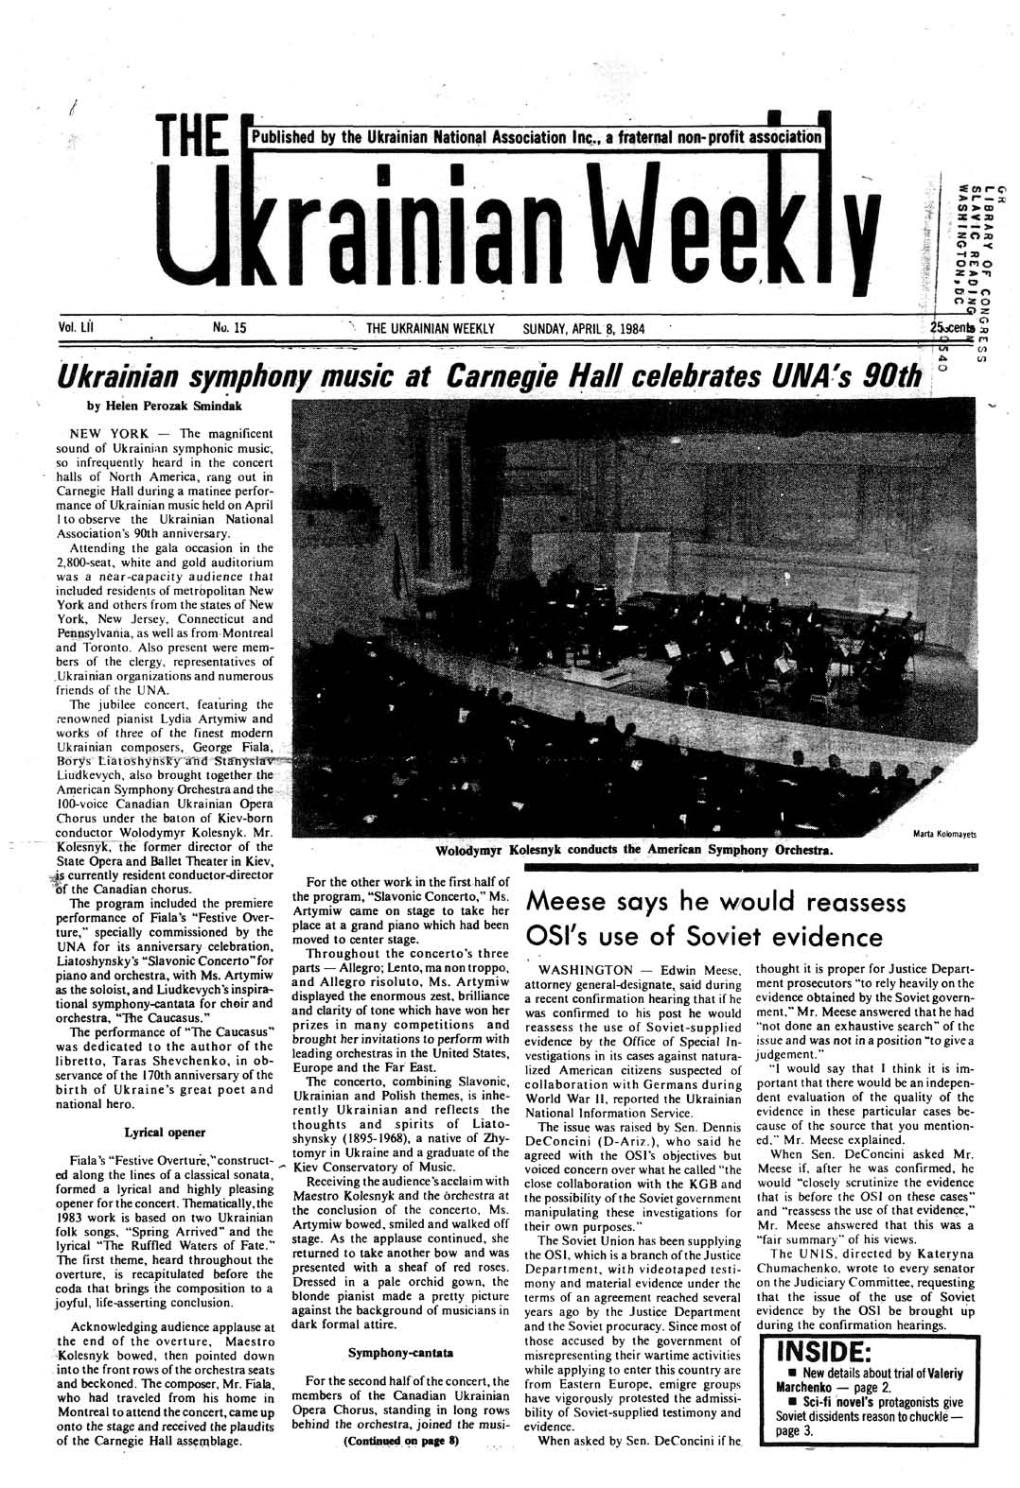 The Ukrainian Weekly 1984, No.15